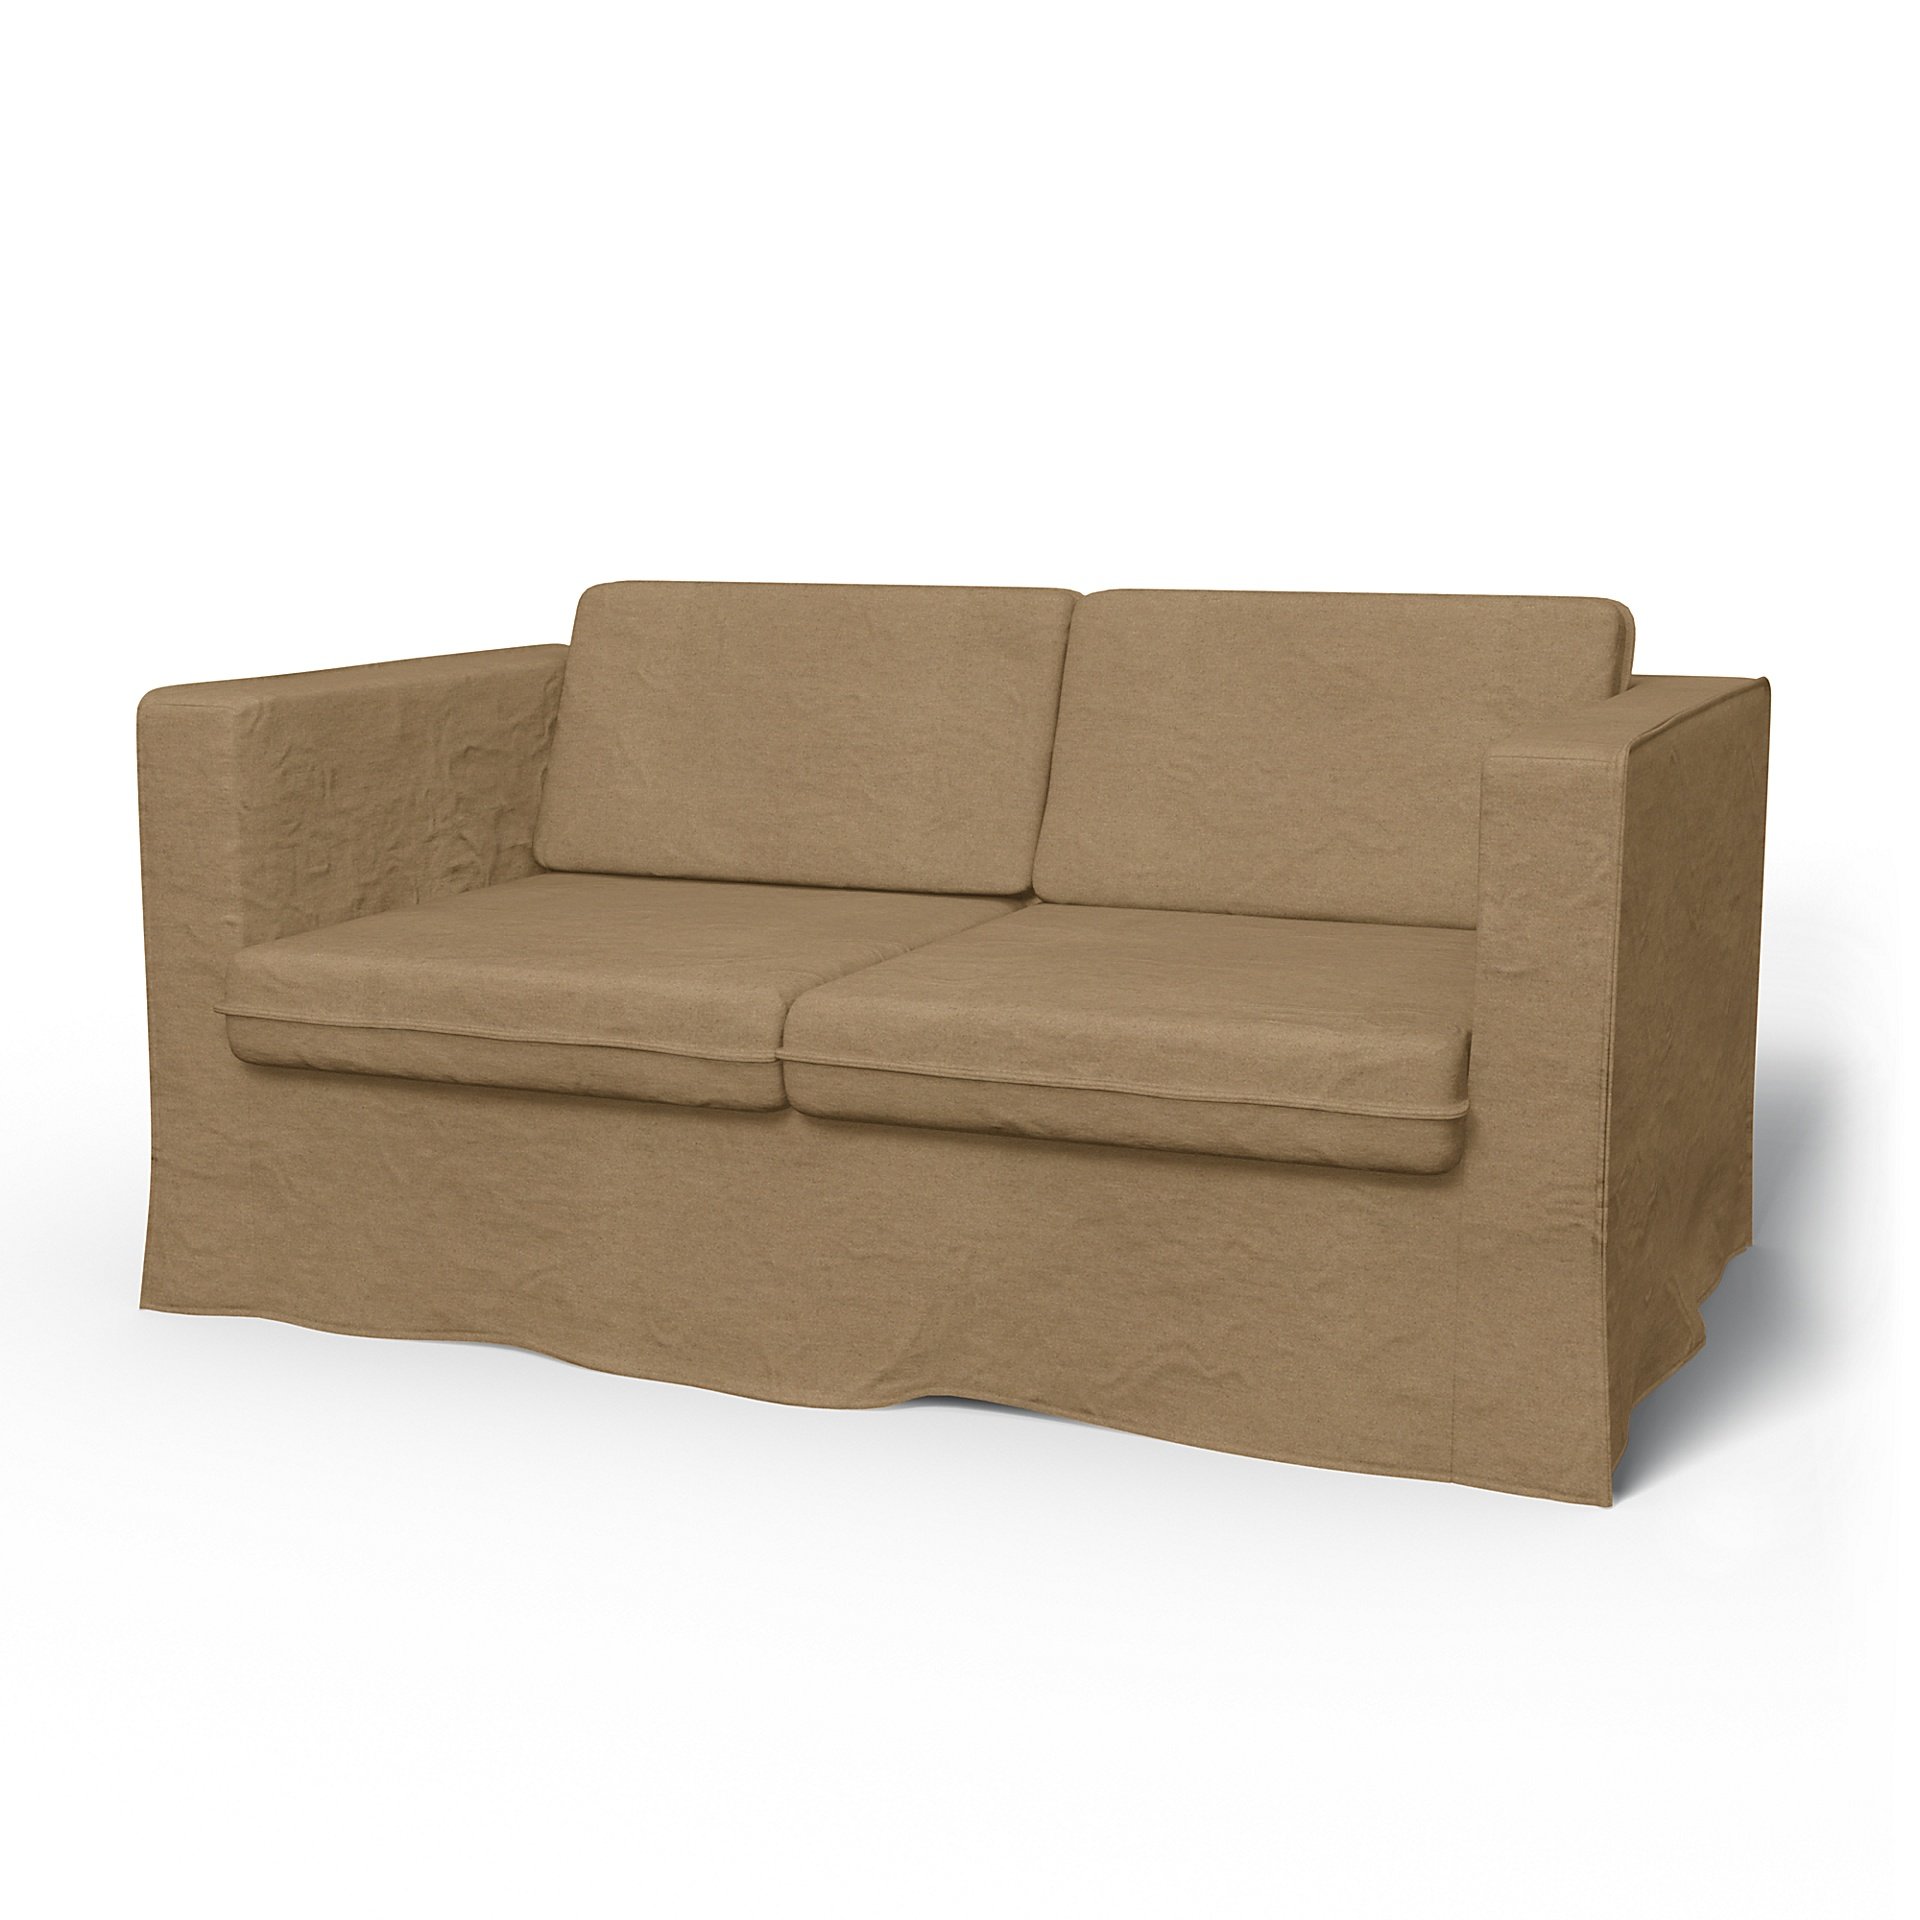 IKEA - Karlstad 2 Seater Sofa Cover, Sand, Wool - Bemz